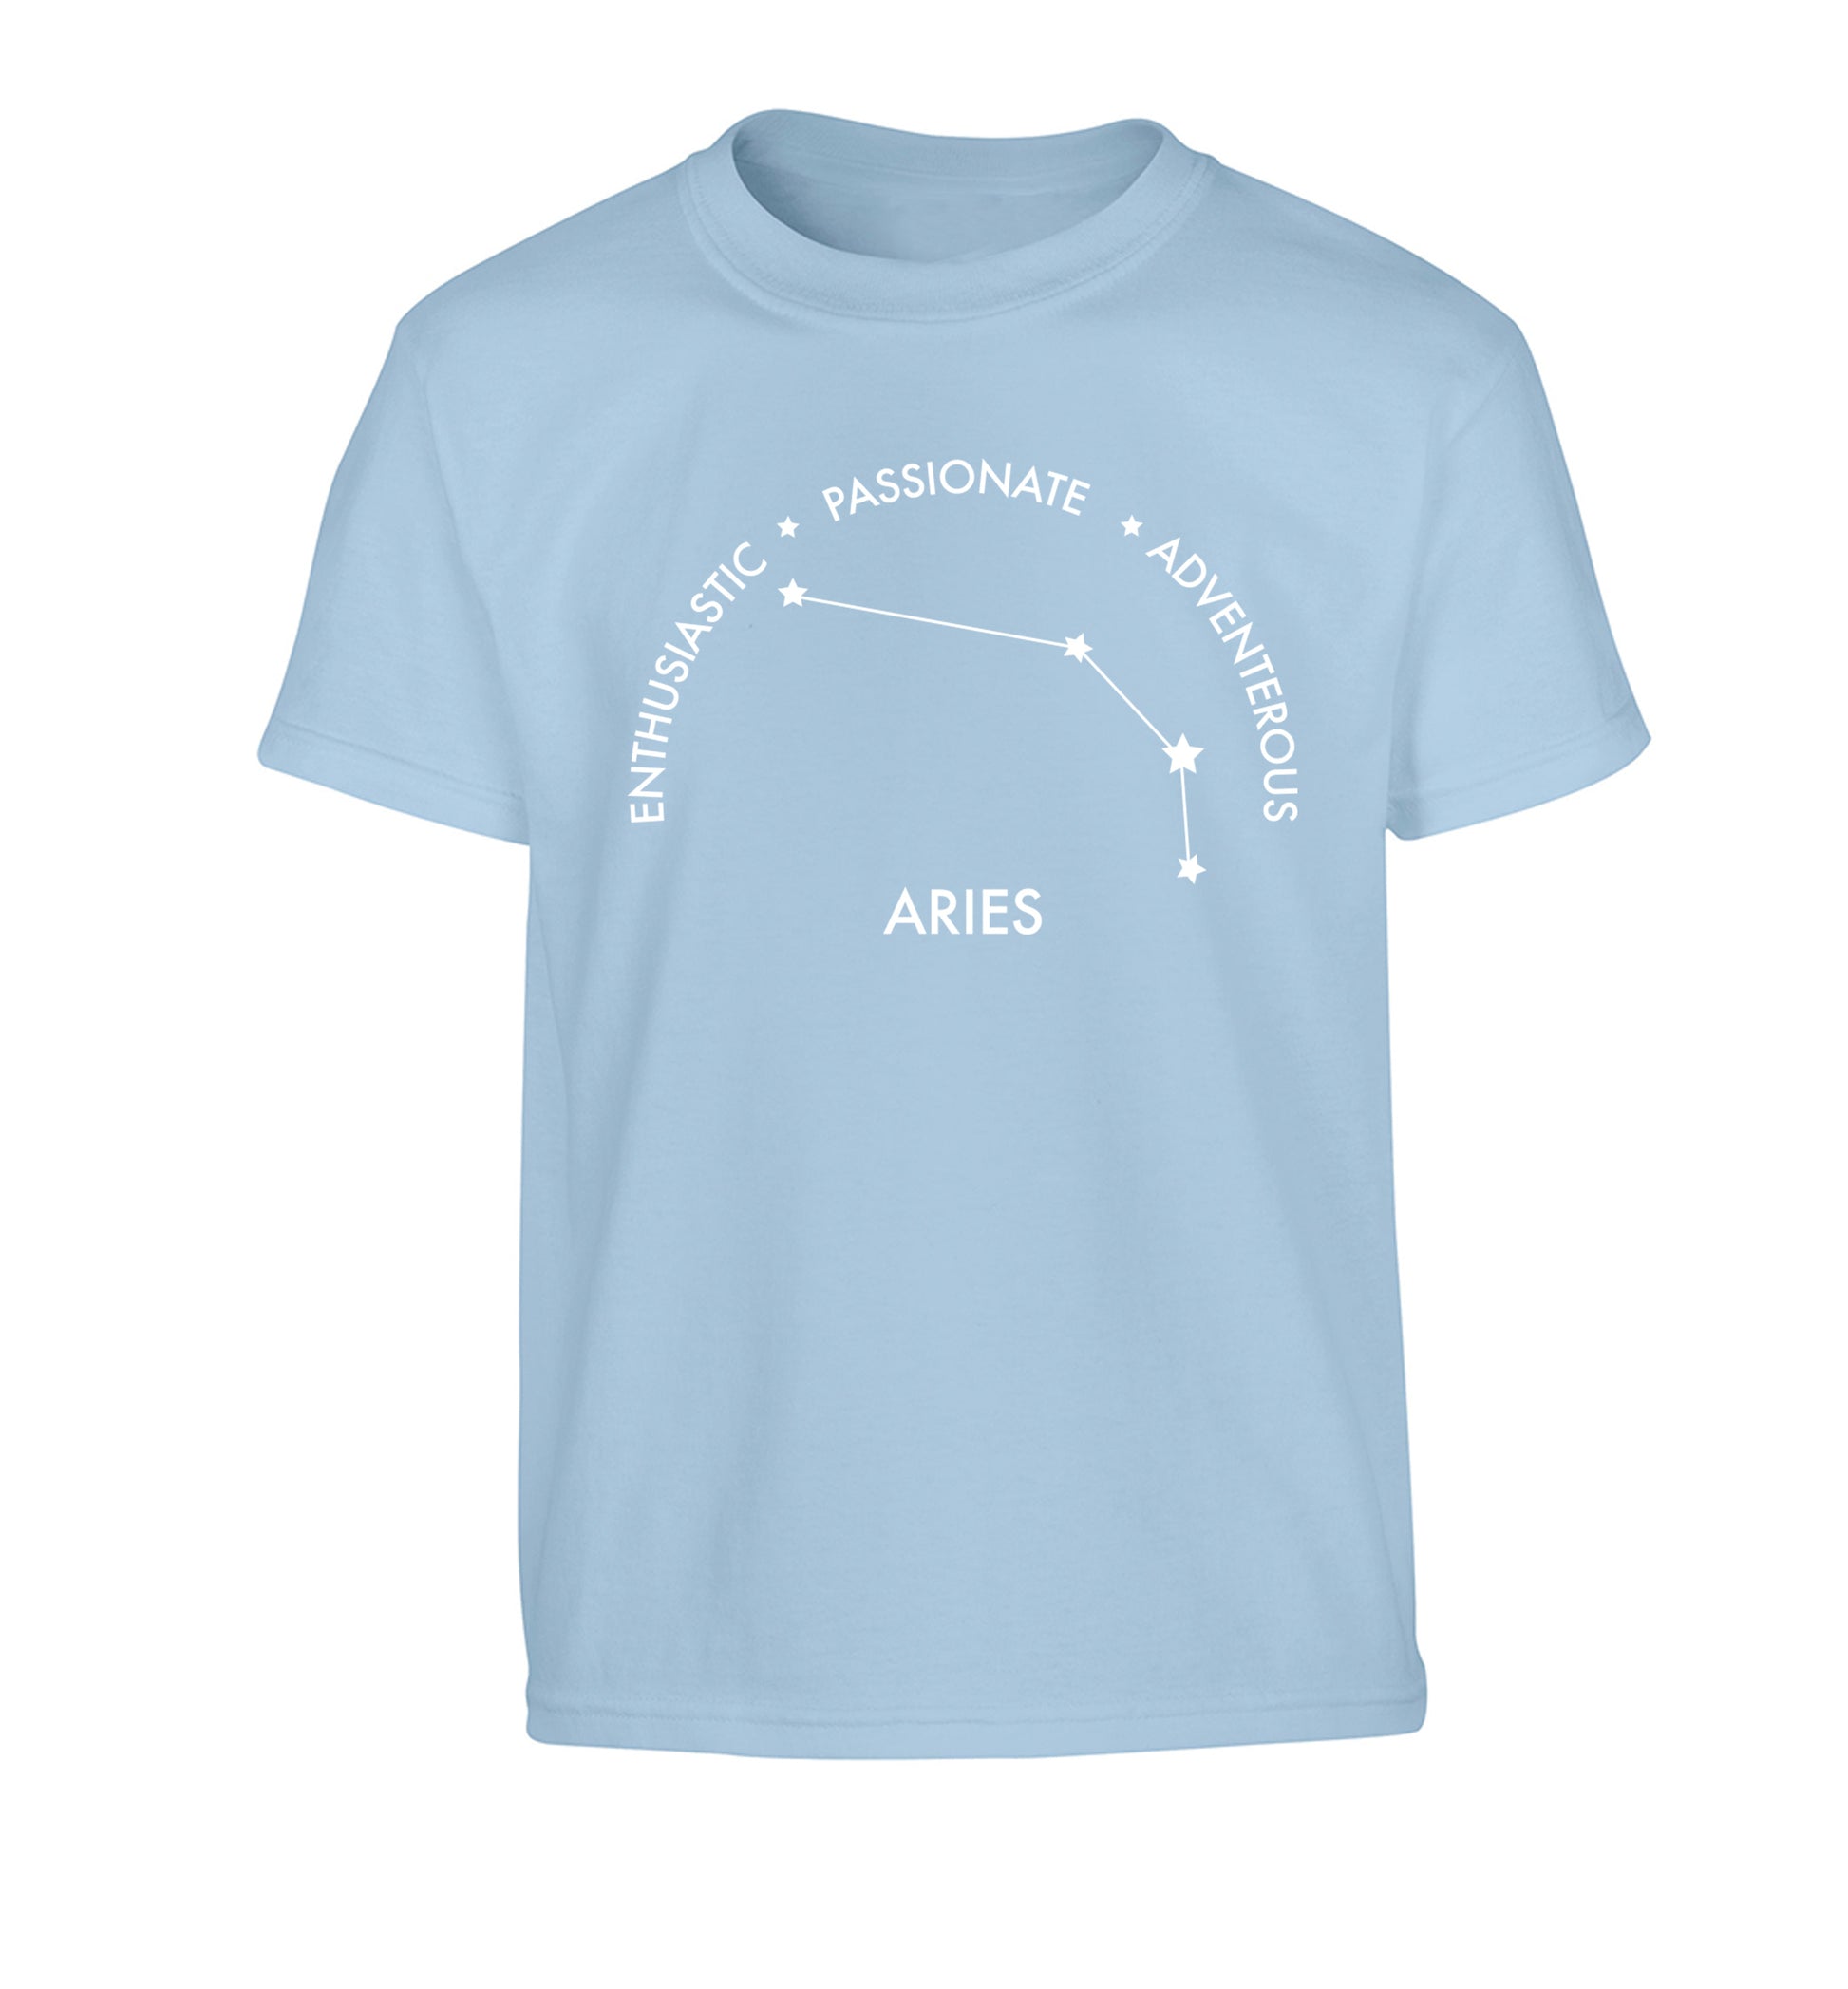 Aries enthusiastic | passionate | adventerous Children's light blue Tshirt 12-13 Years